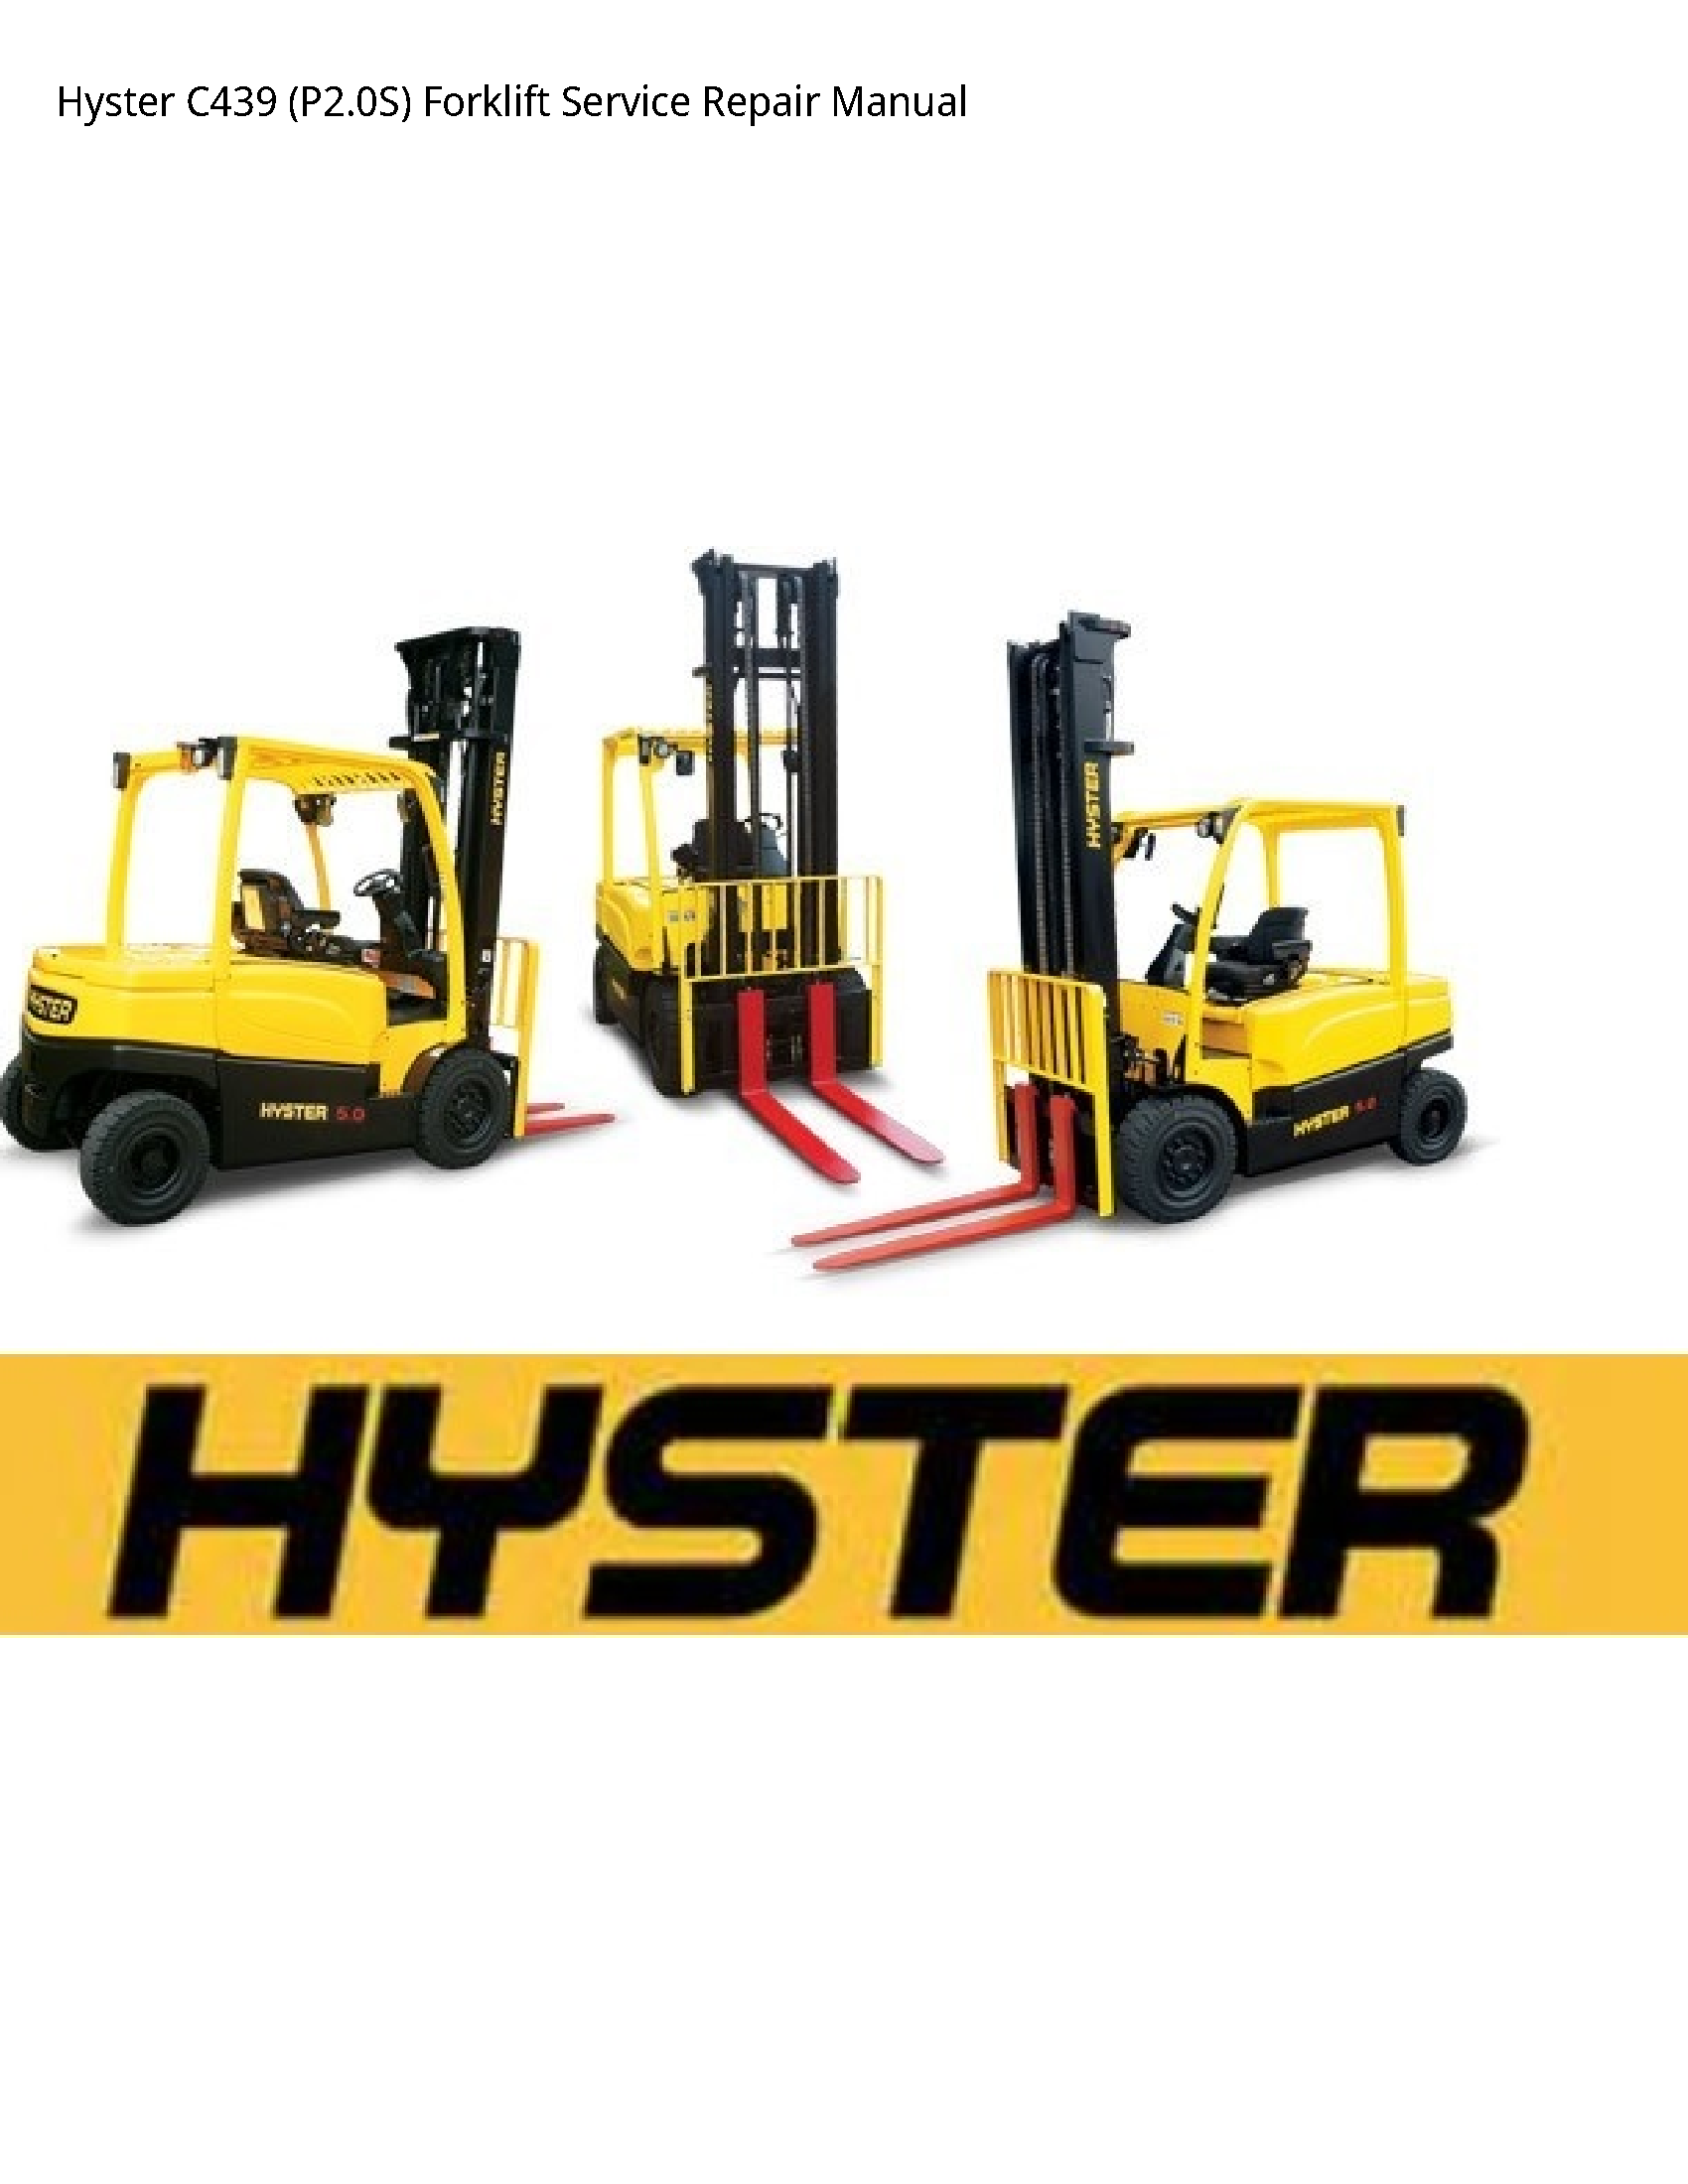 Hyster C439 Forklift manual